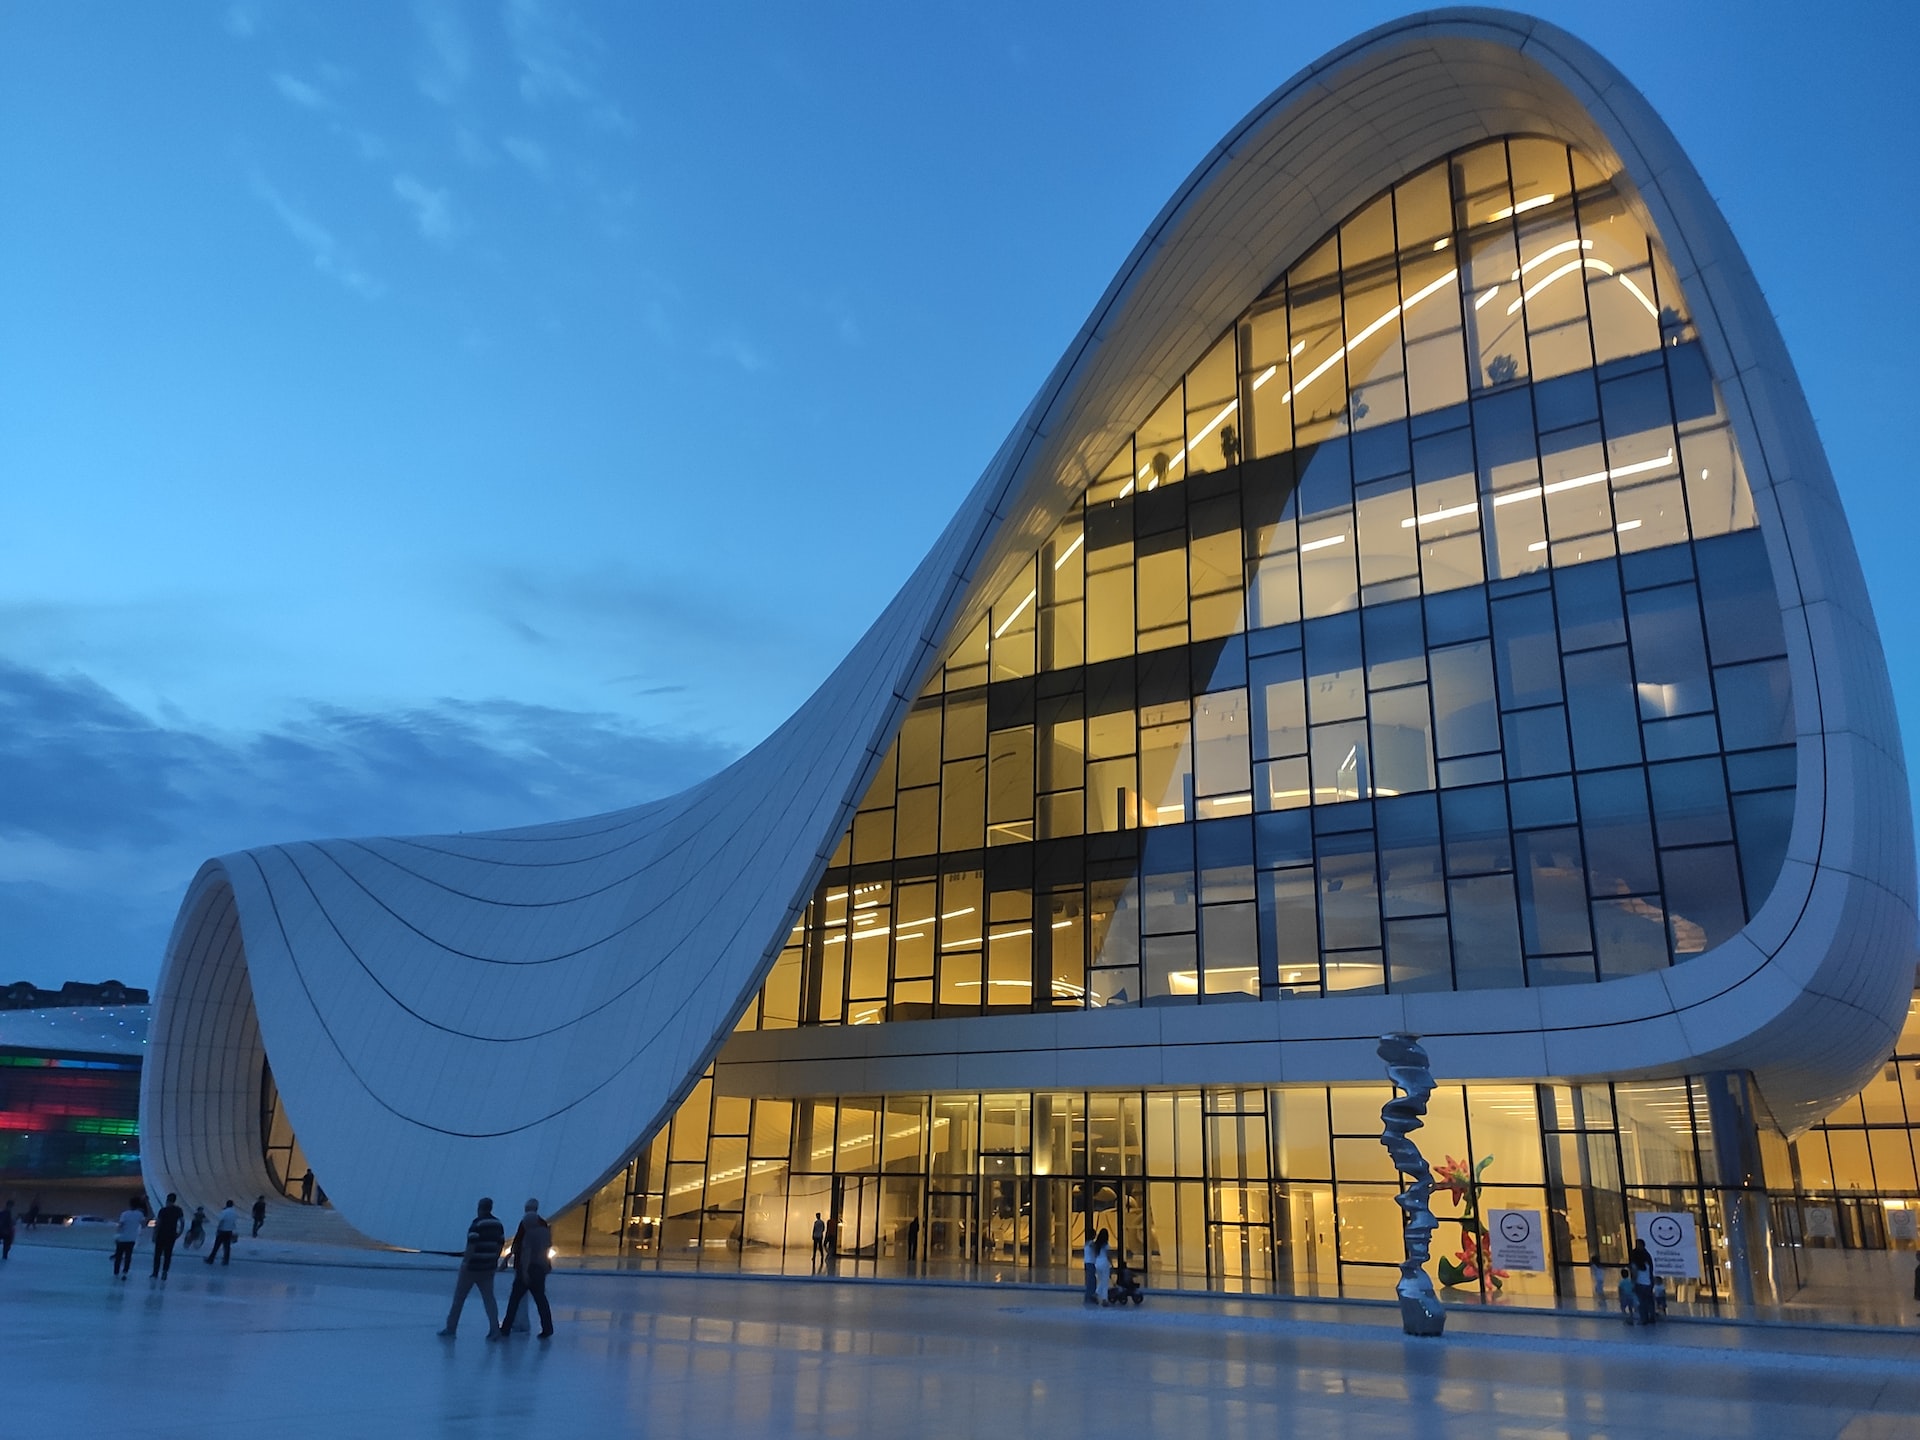 Heydar Aliyev Center as example of modern architecture